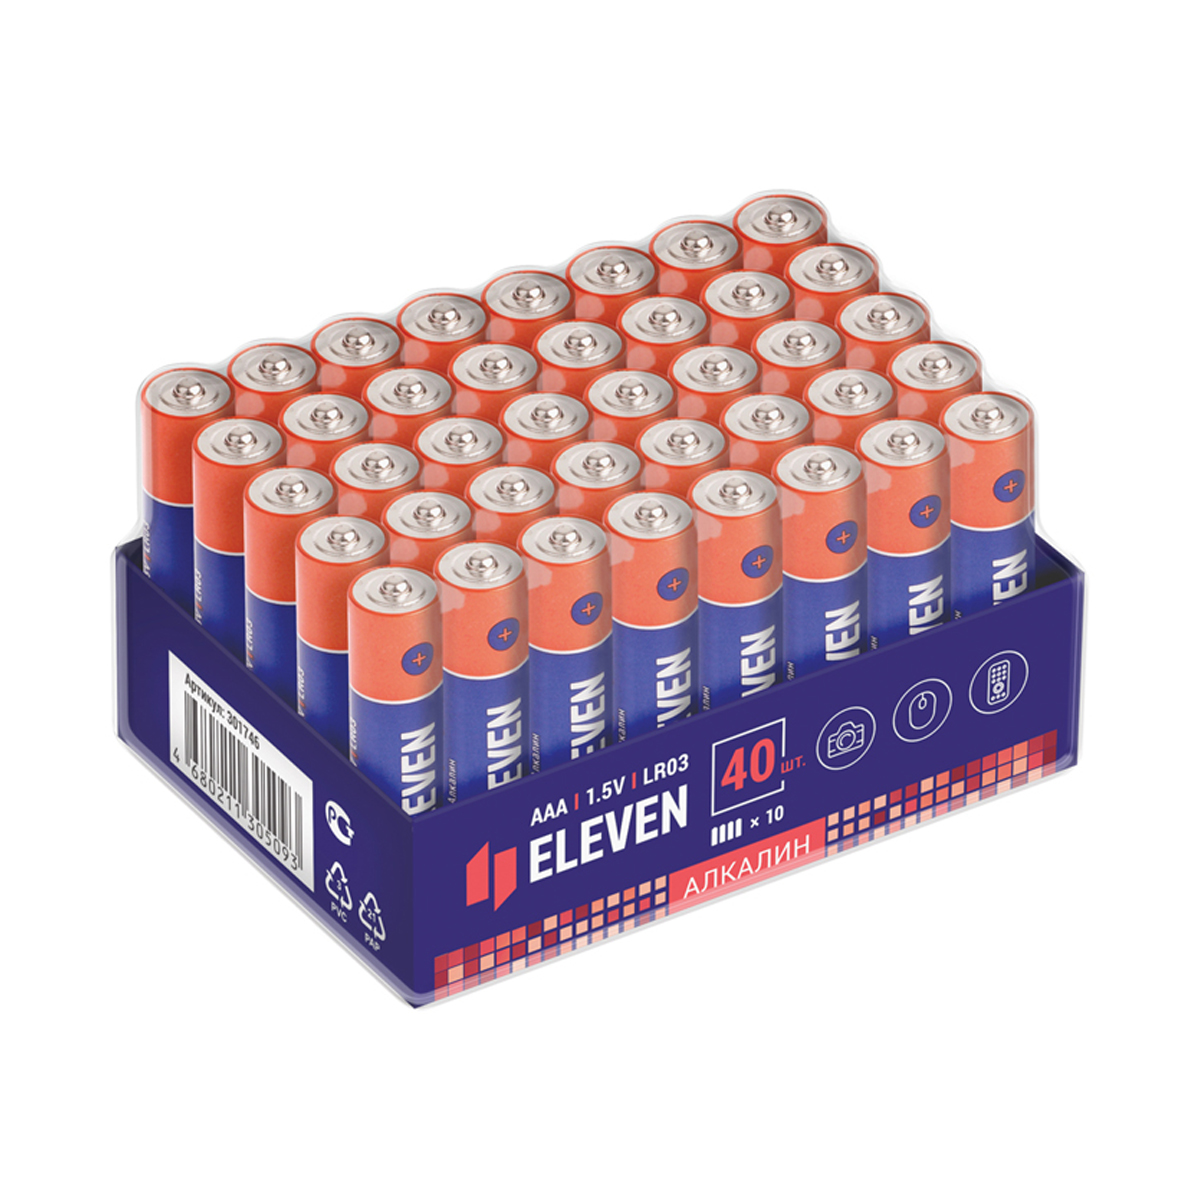 Батарейки Eleven 3А Мизинчиковые AAA (LR03), алкалиновые, 1,5В, 40 шт